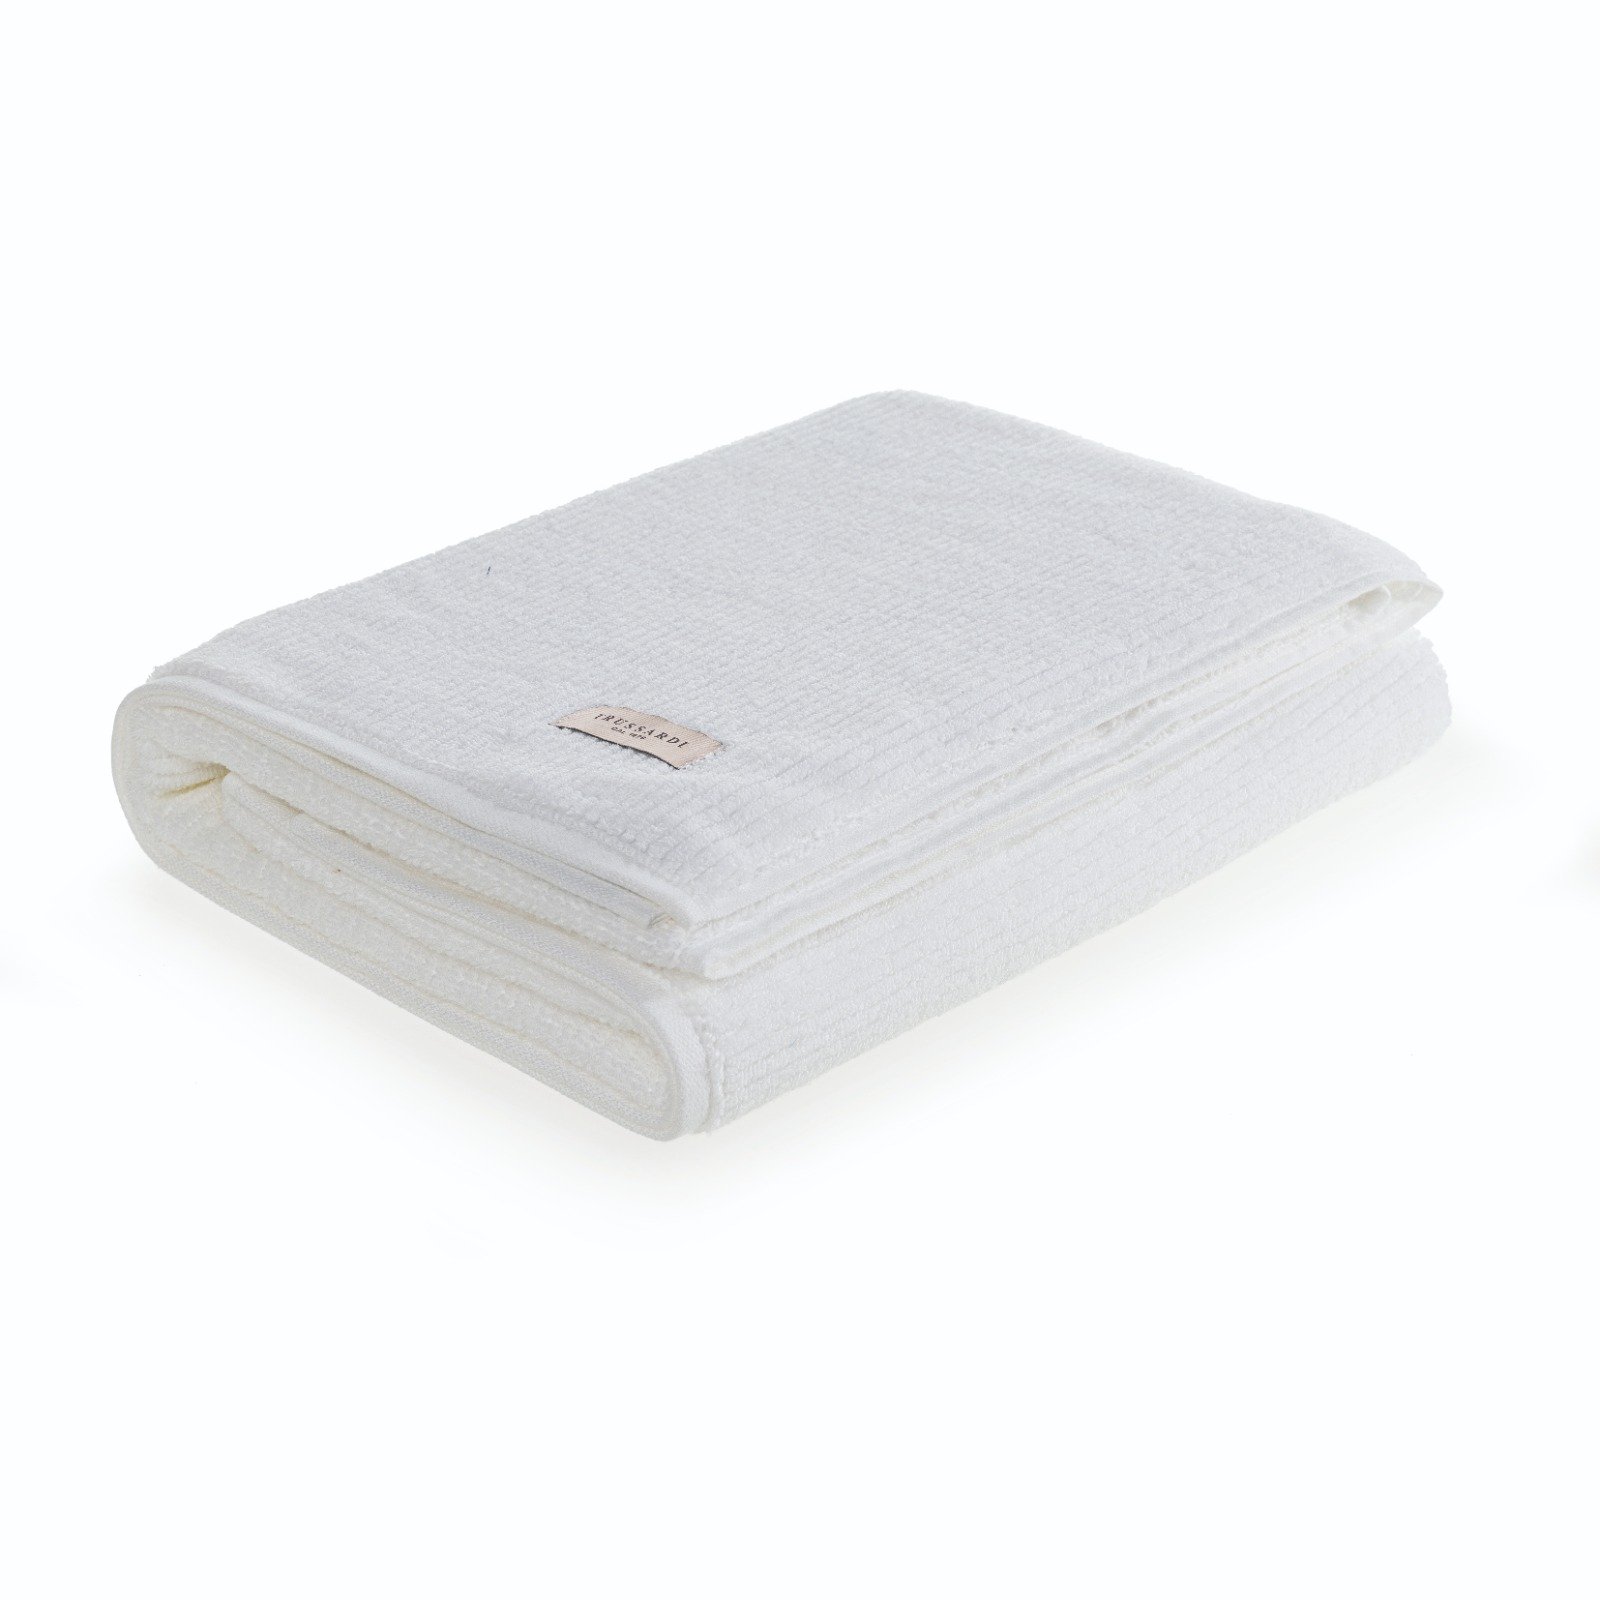 toalha de banho trussardi 100 algodao belluno branco sottile casa still